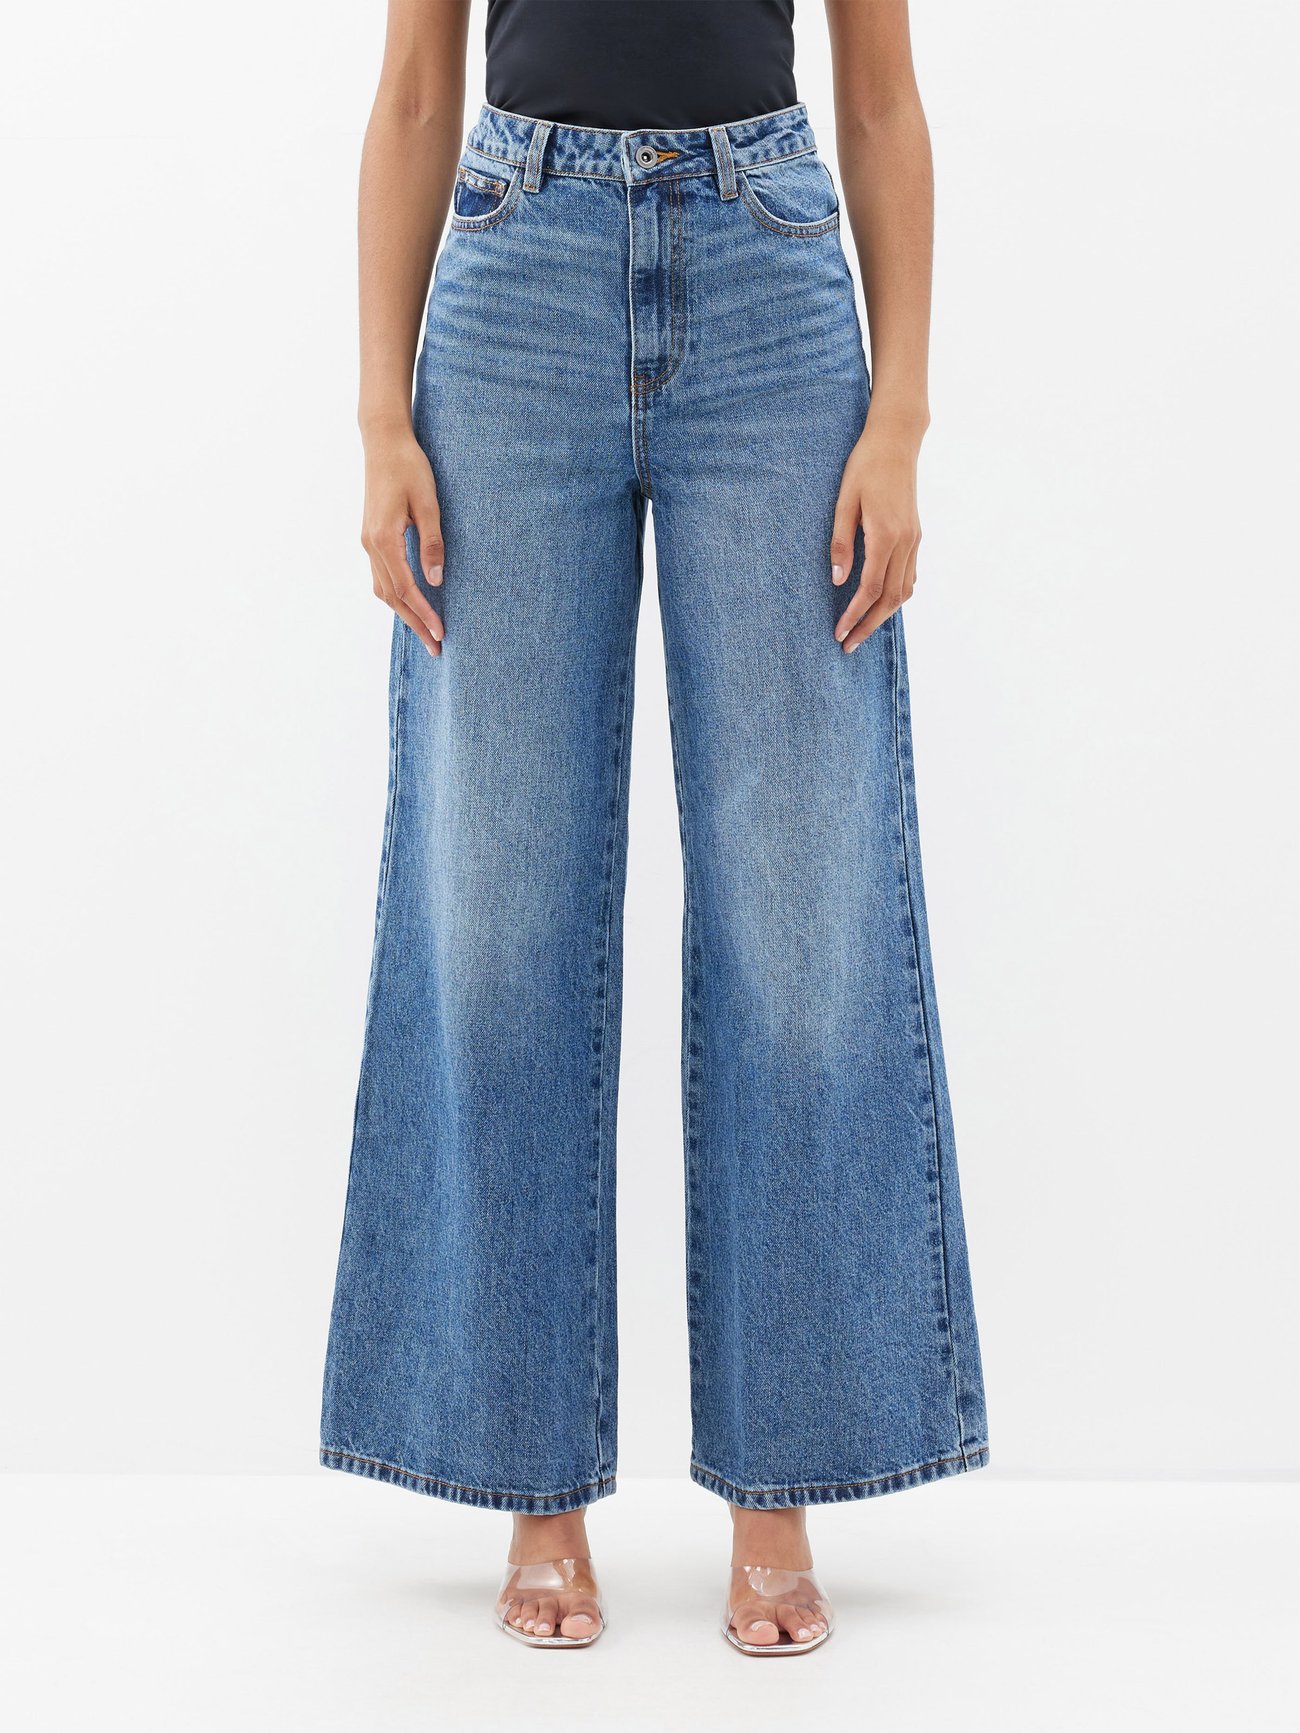 rise leggings Hummel Shaping - Lifestyle - Hummel - claude loose fit jeans  blue - Women's mid - Brands